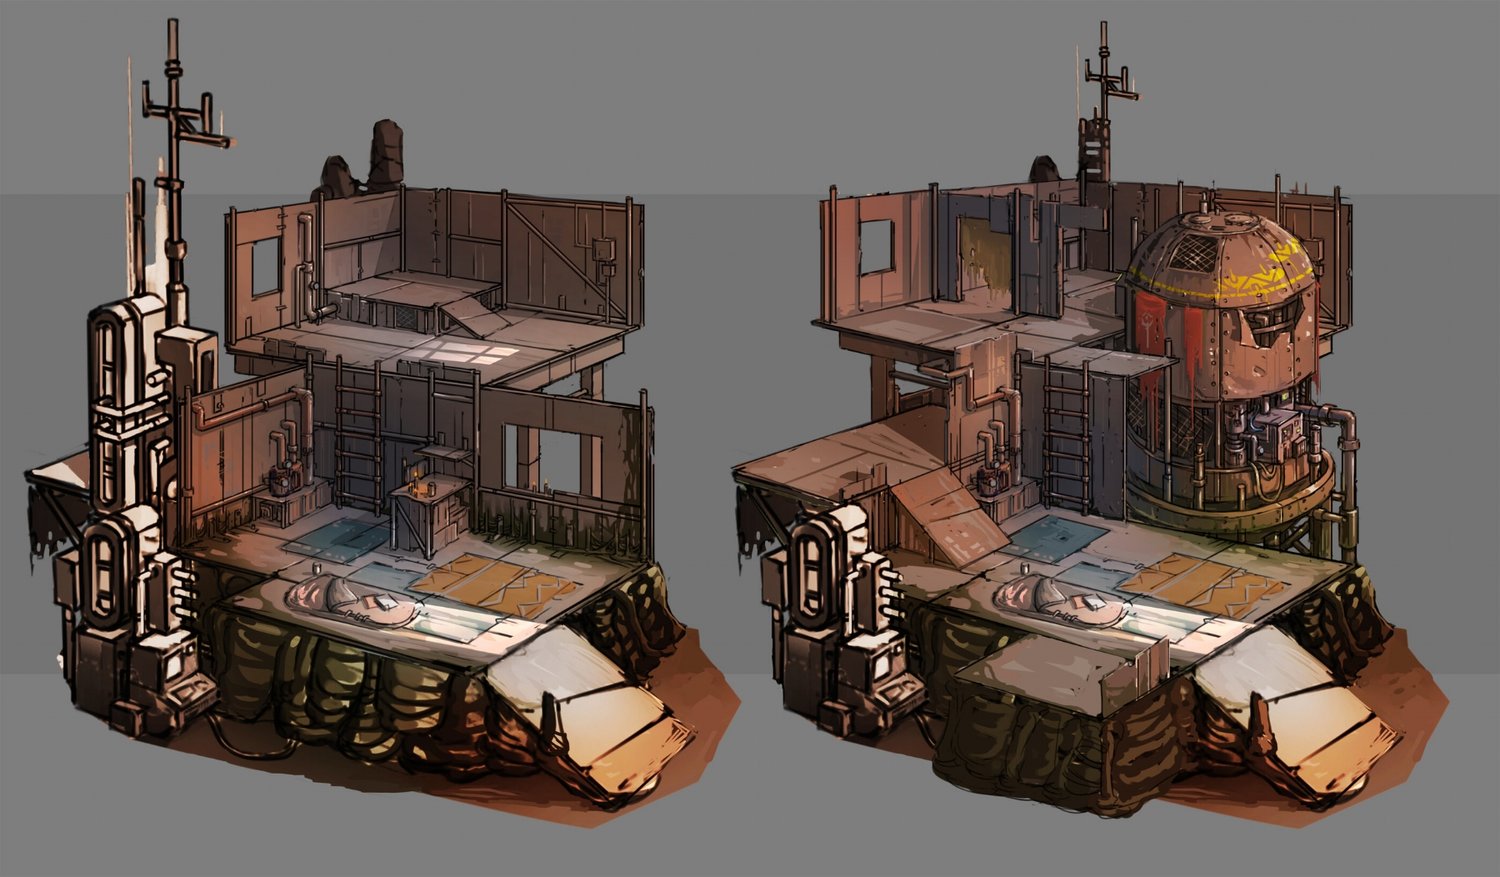 DoA-Concept_interior-slum01.jpg